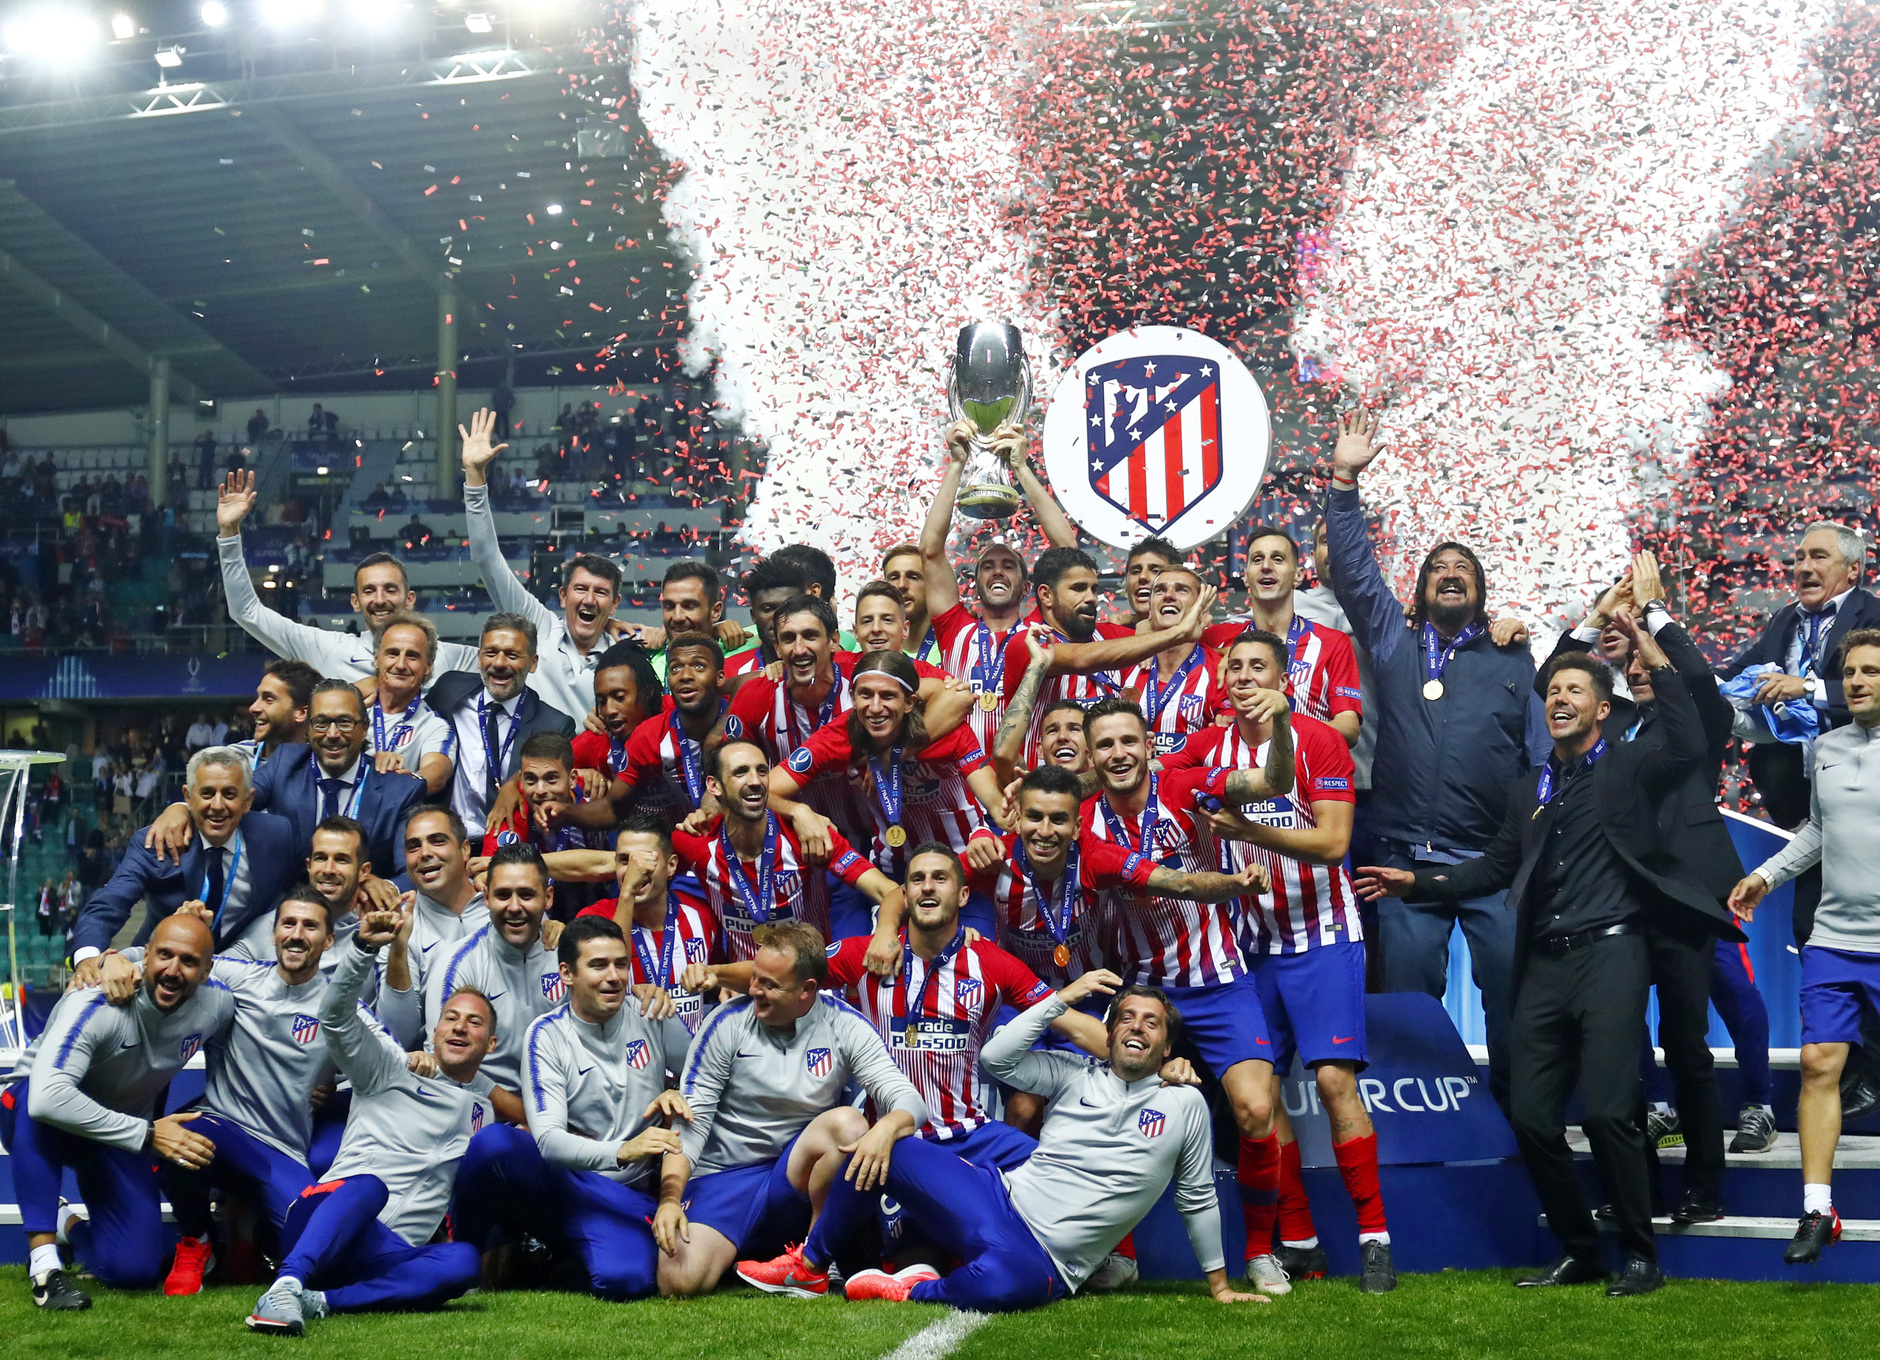   El Atlético de Madrid, campeón de la Supercopa de Europa 2018 LFIMBByZHi__86I4977